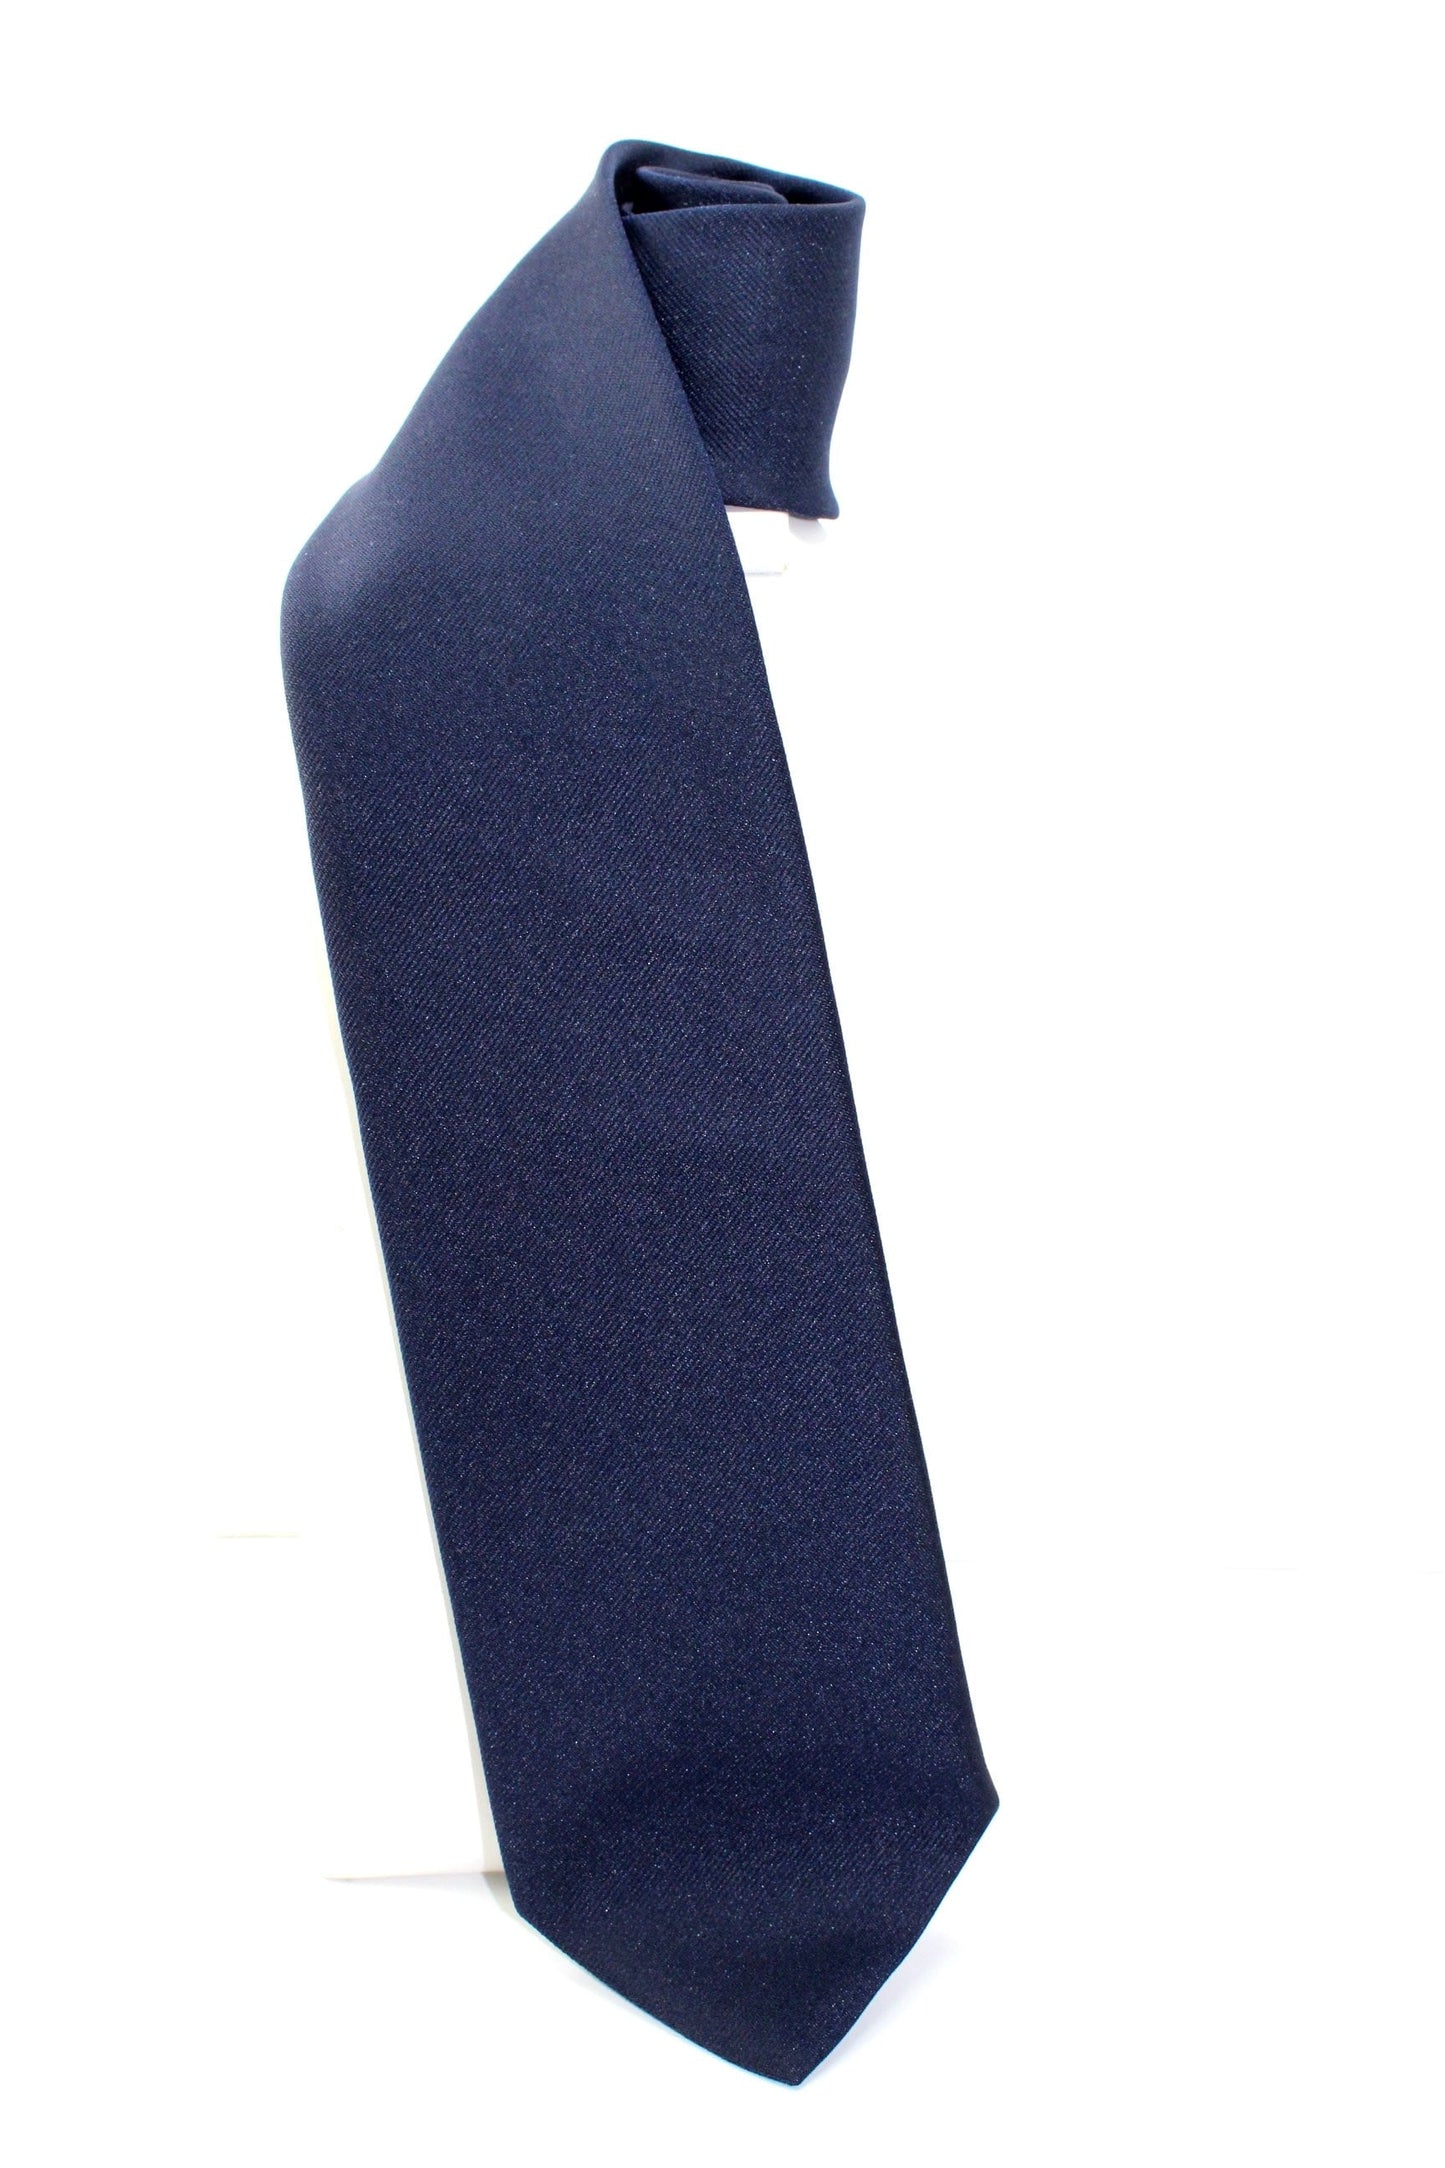 Puritan Solid Navy Dark Blue Polyester Tie - Twill Weave uniform tie formal wear